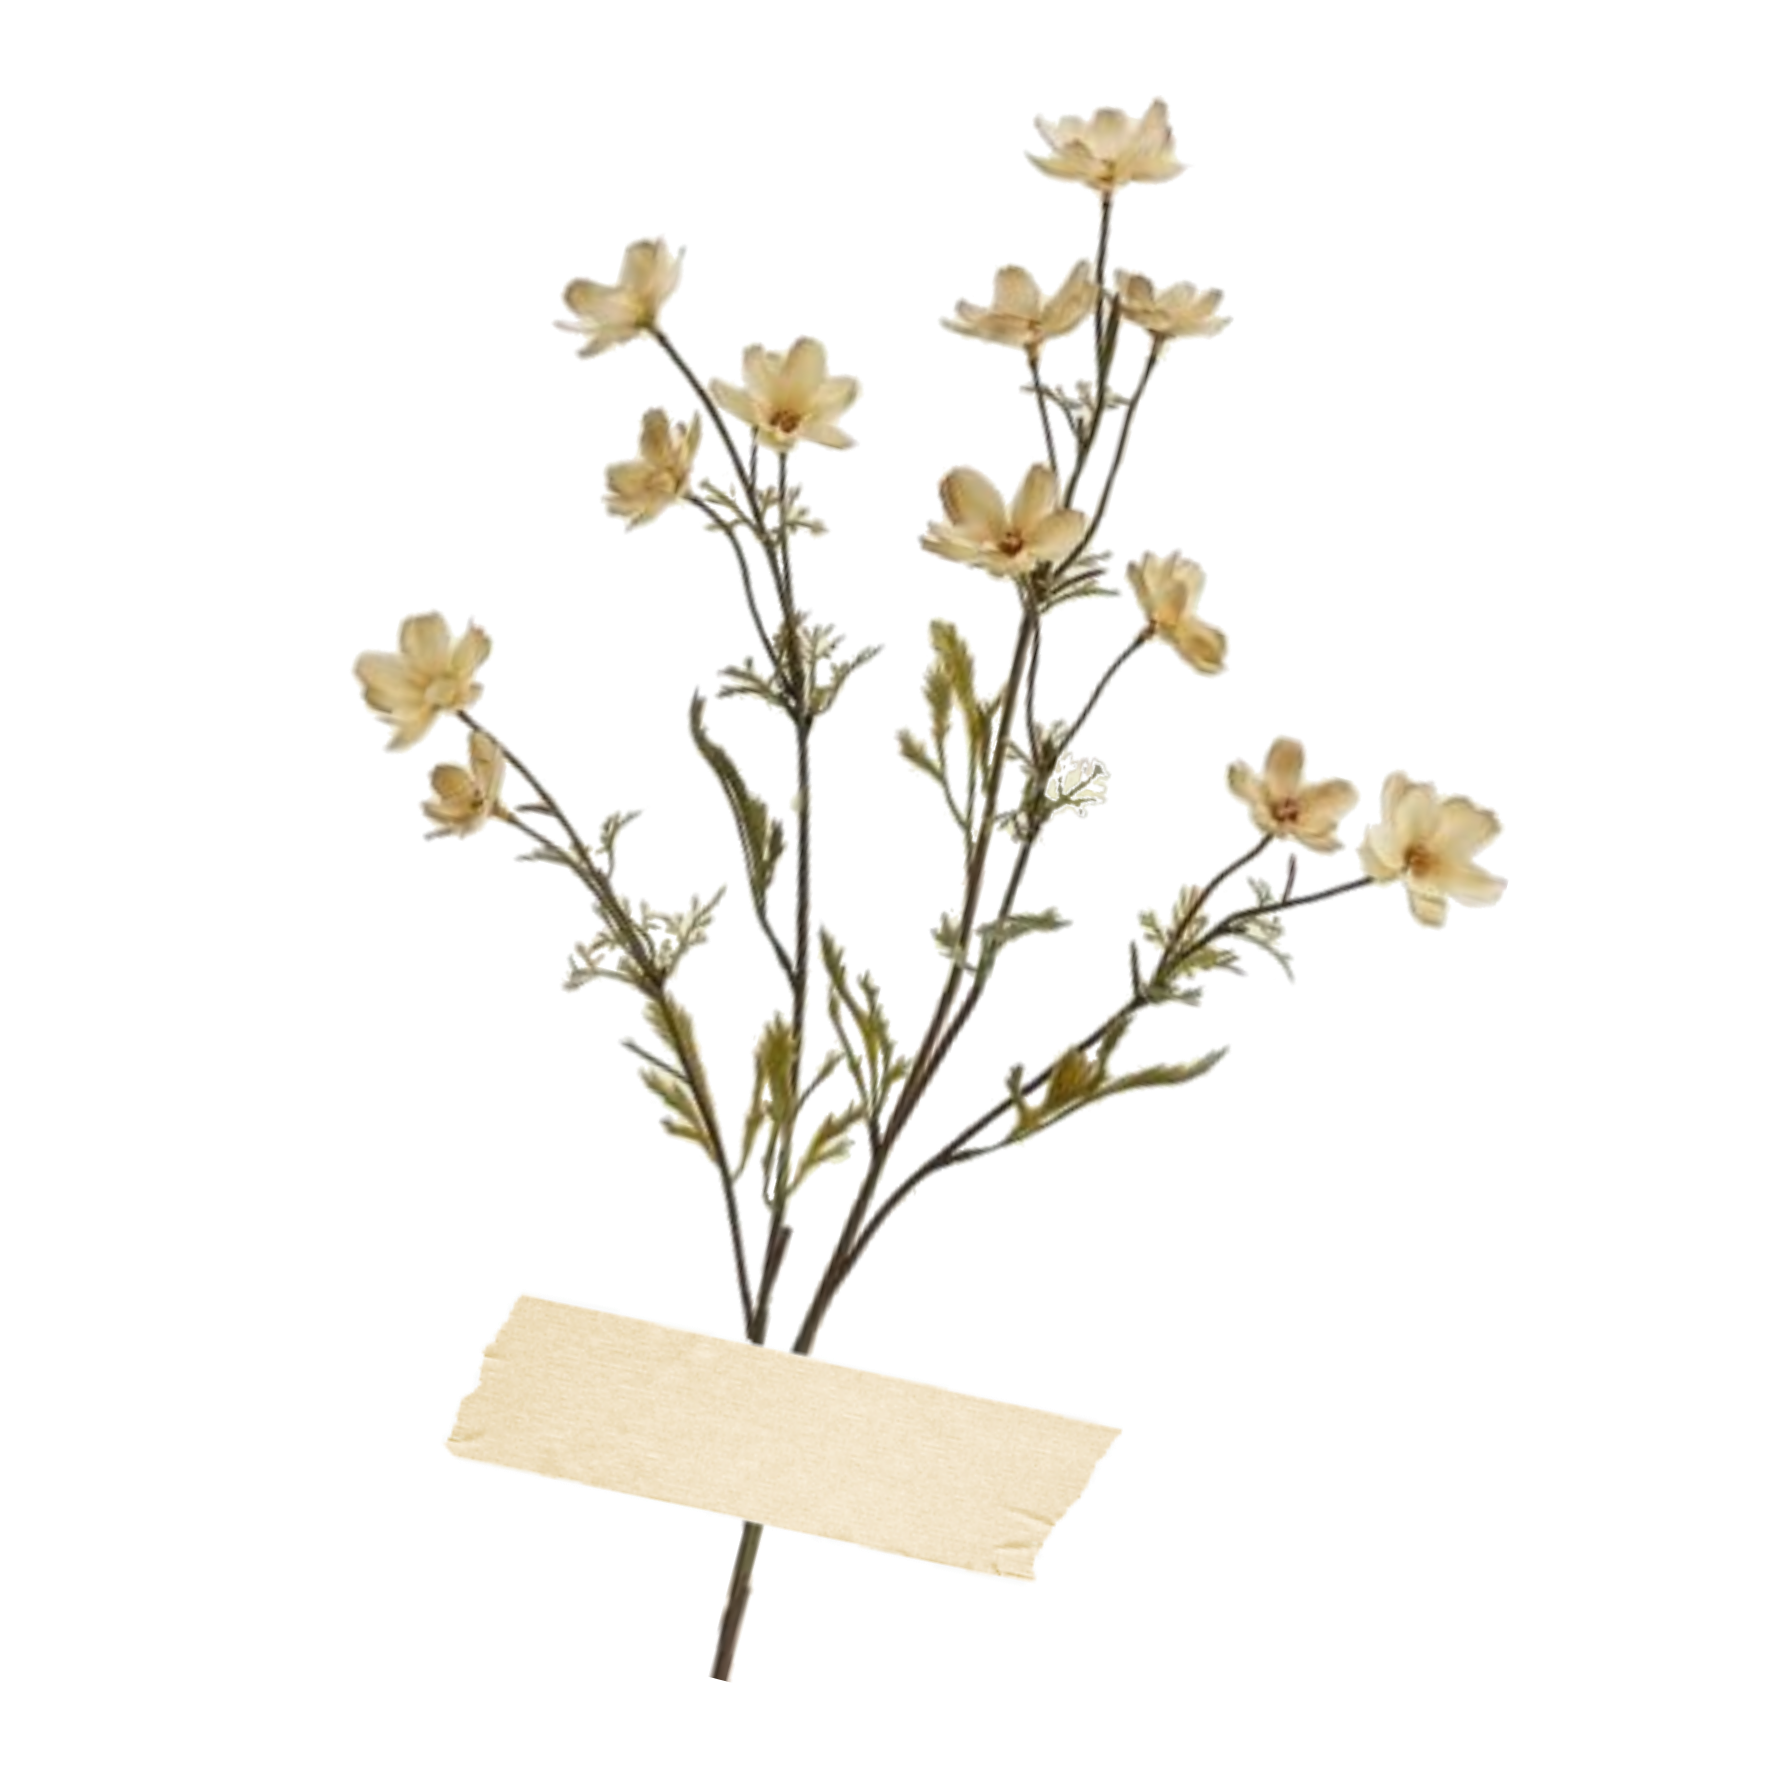 flower asthetic freetoedit sticker by @lucasenunmundodeperr